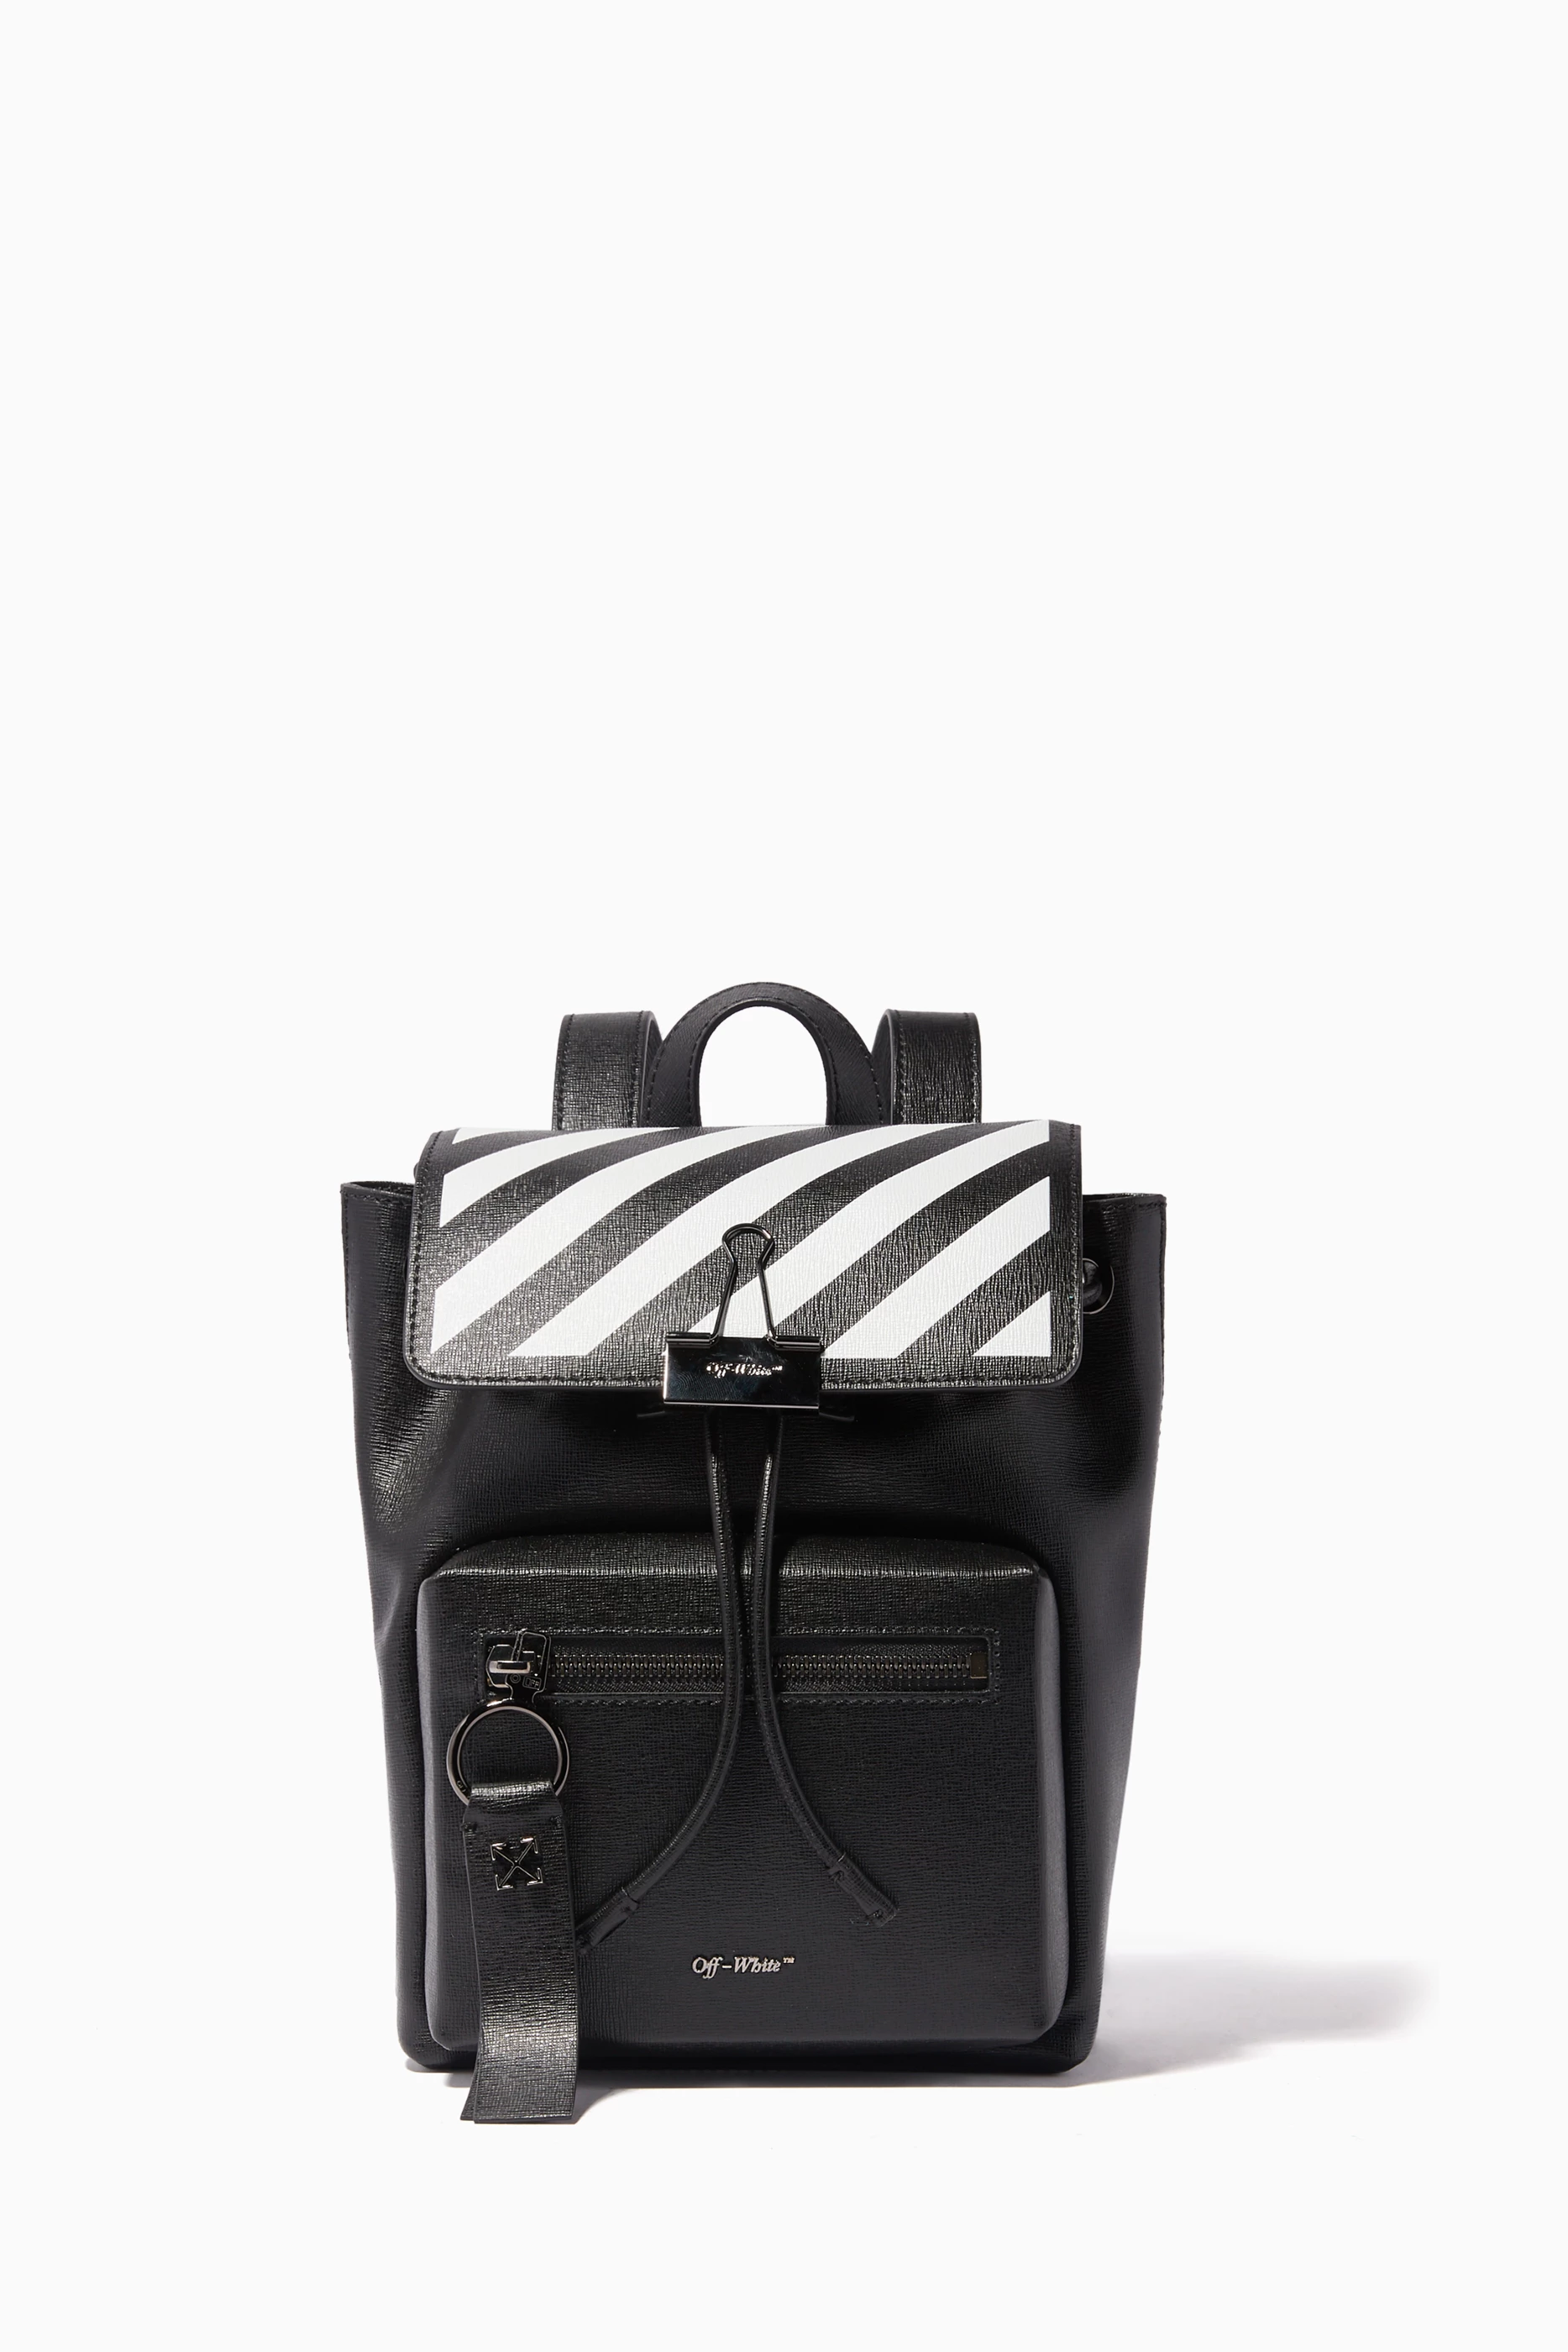 Off-white Binder Diagonal Striped Backpack In Black,white